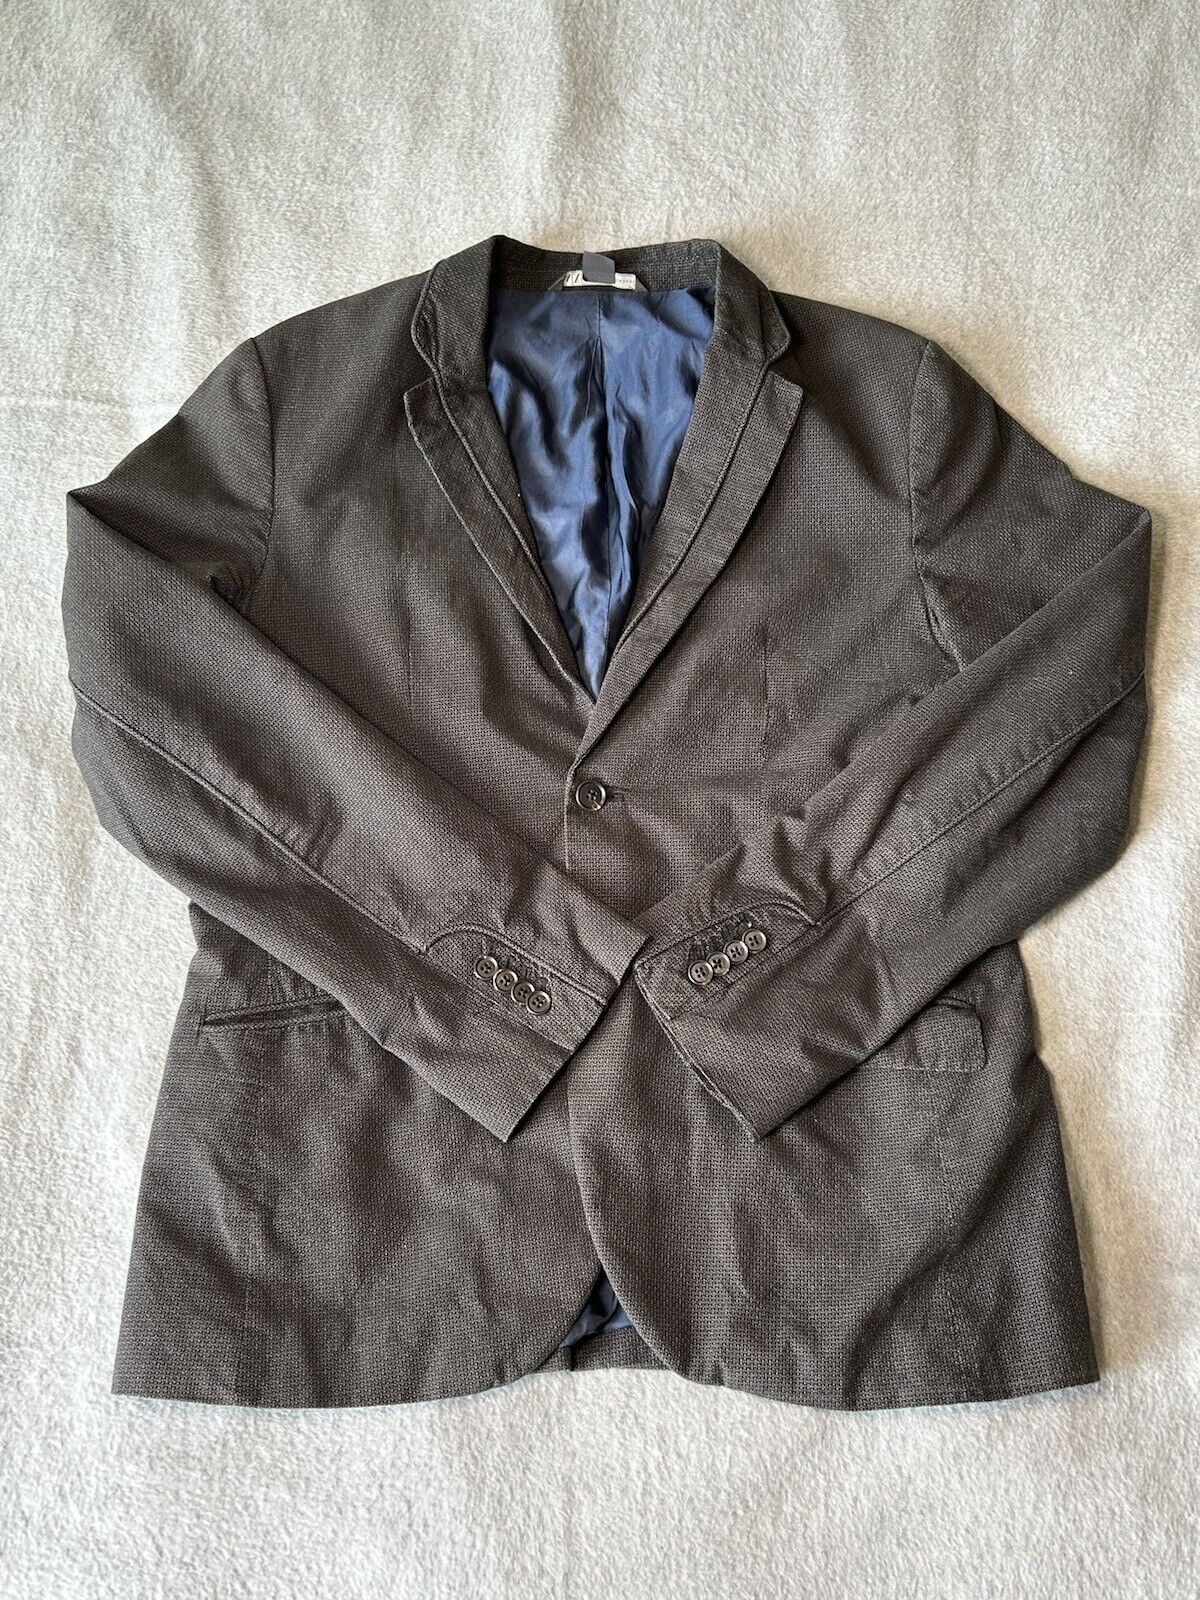 Armani Exchange Suit Jacket Mens 42 Reg Blazer Sport coat Geometric Plaid Stripe